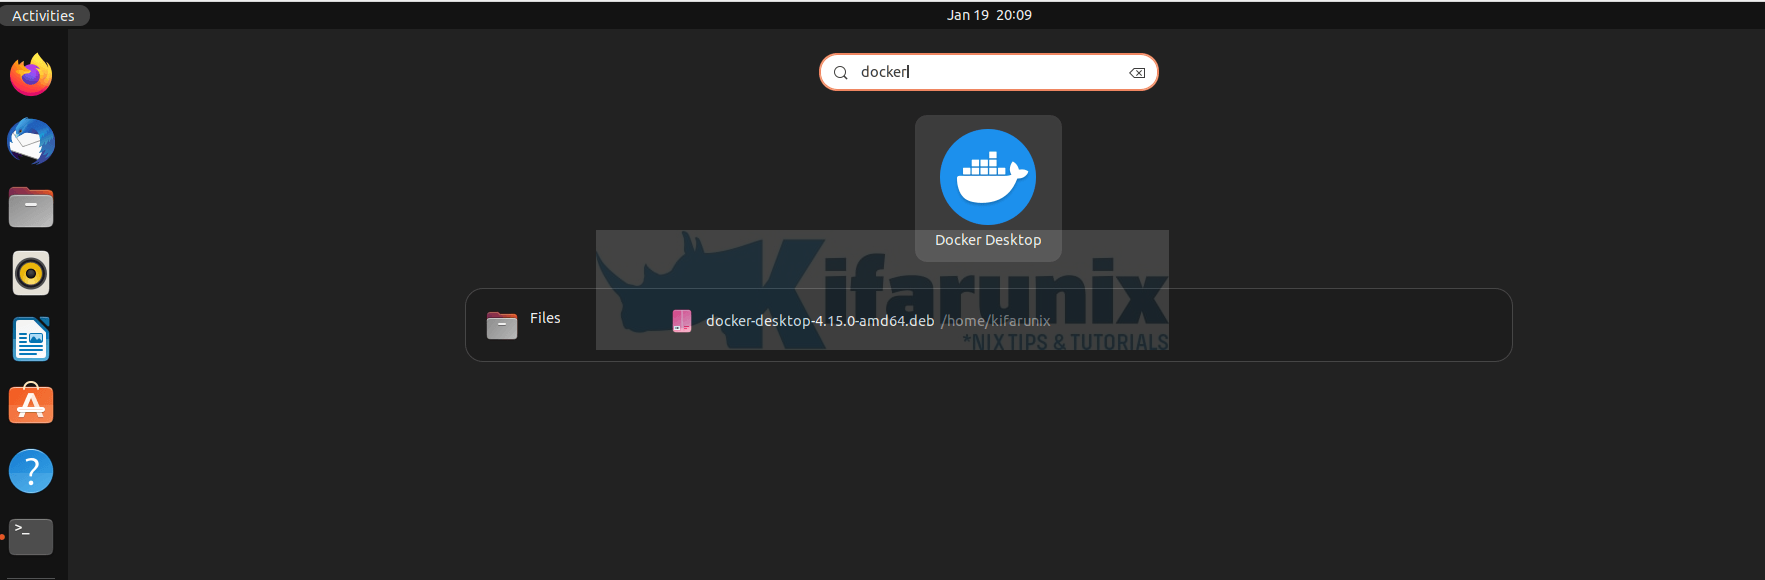 how to Install Docker Desktop on Ubuntu